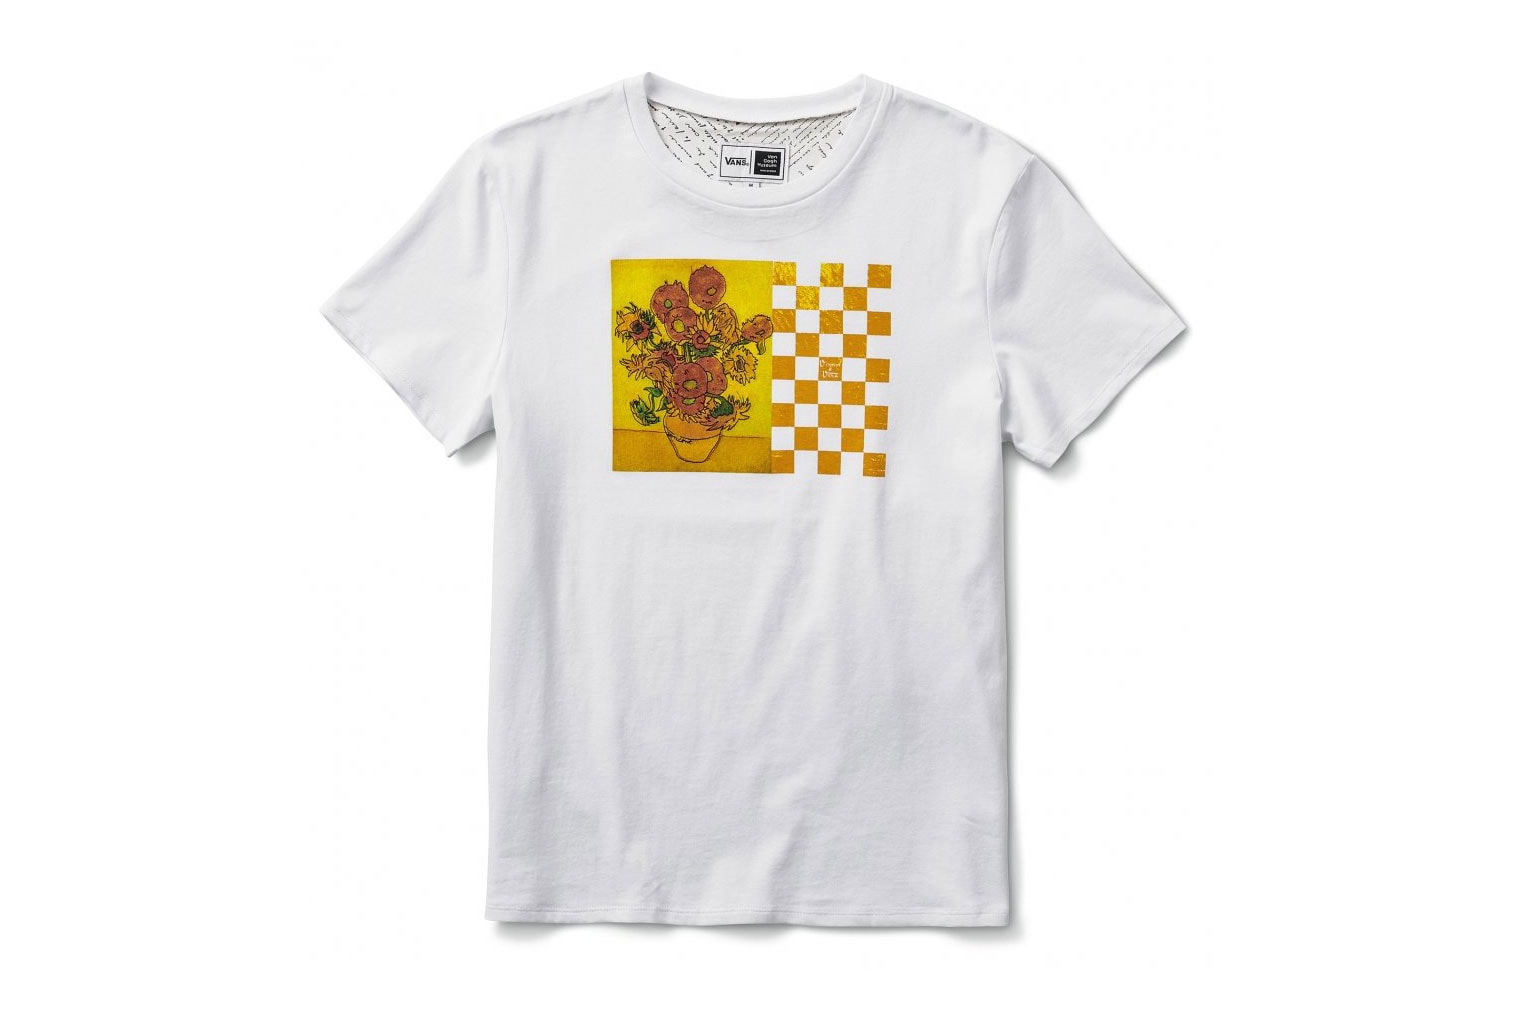 vincent van gogh museum vans collaboration artwork white short sleeve tee shirt yellow sunflower checkerboard print